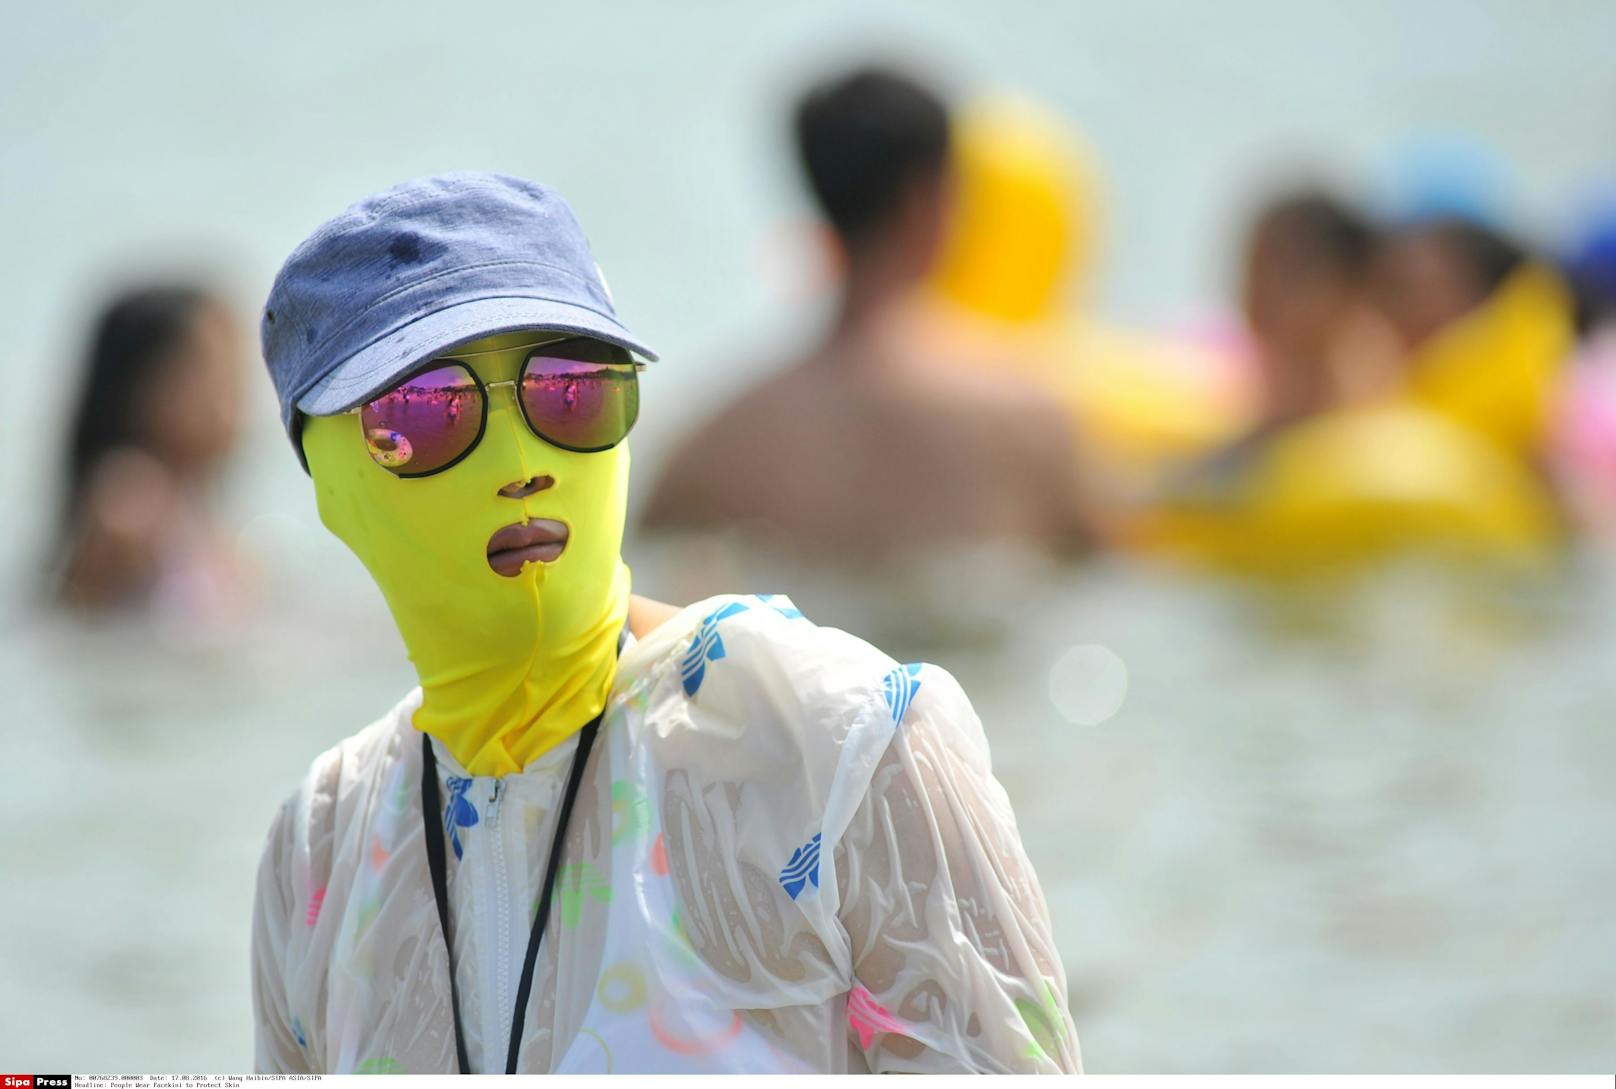 Strandbesucherin mit Facekini als Sonnenschutz in Qingdao / China.